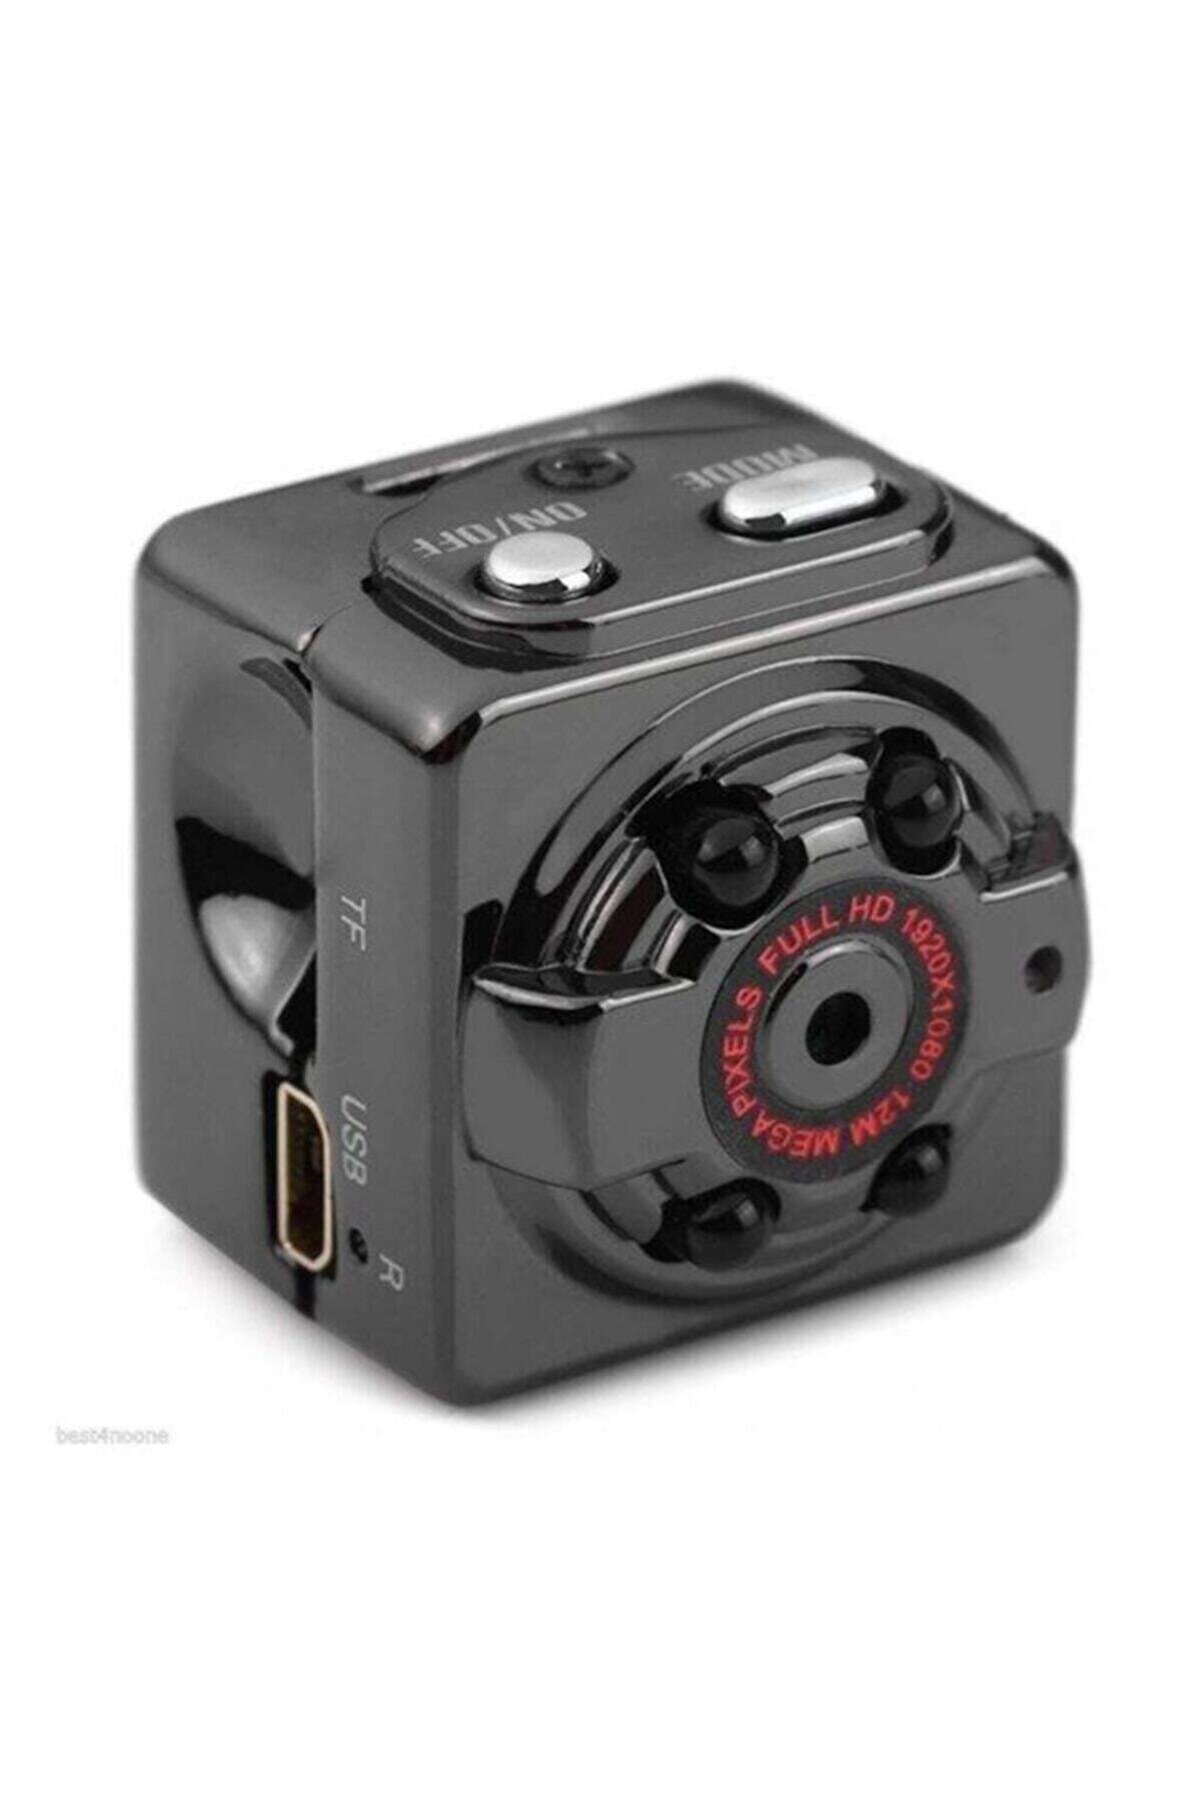 Luxel Gizli Aksiyon Ve Araç Video Mini Kamera Sq8 Full Hd 1080 En Siga